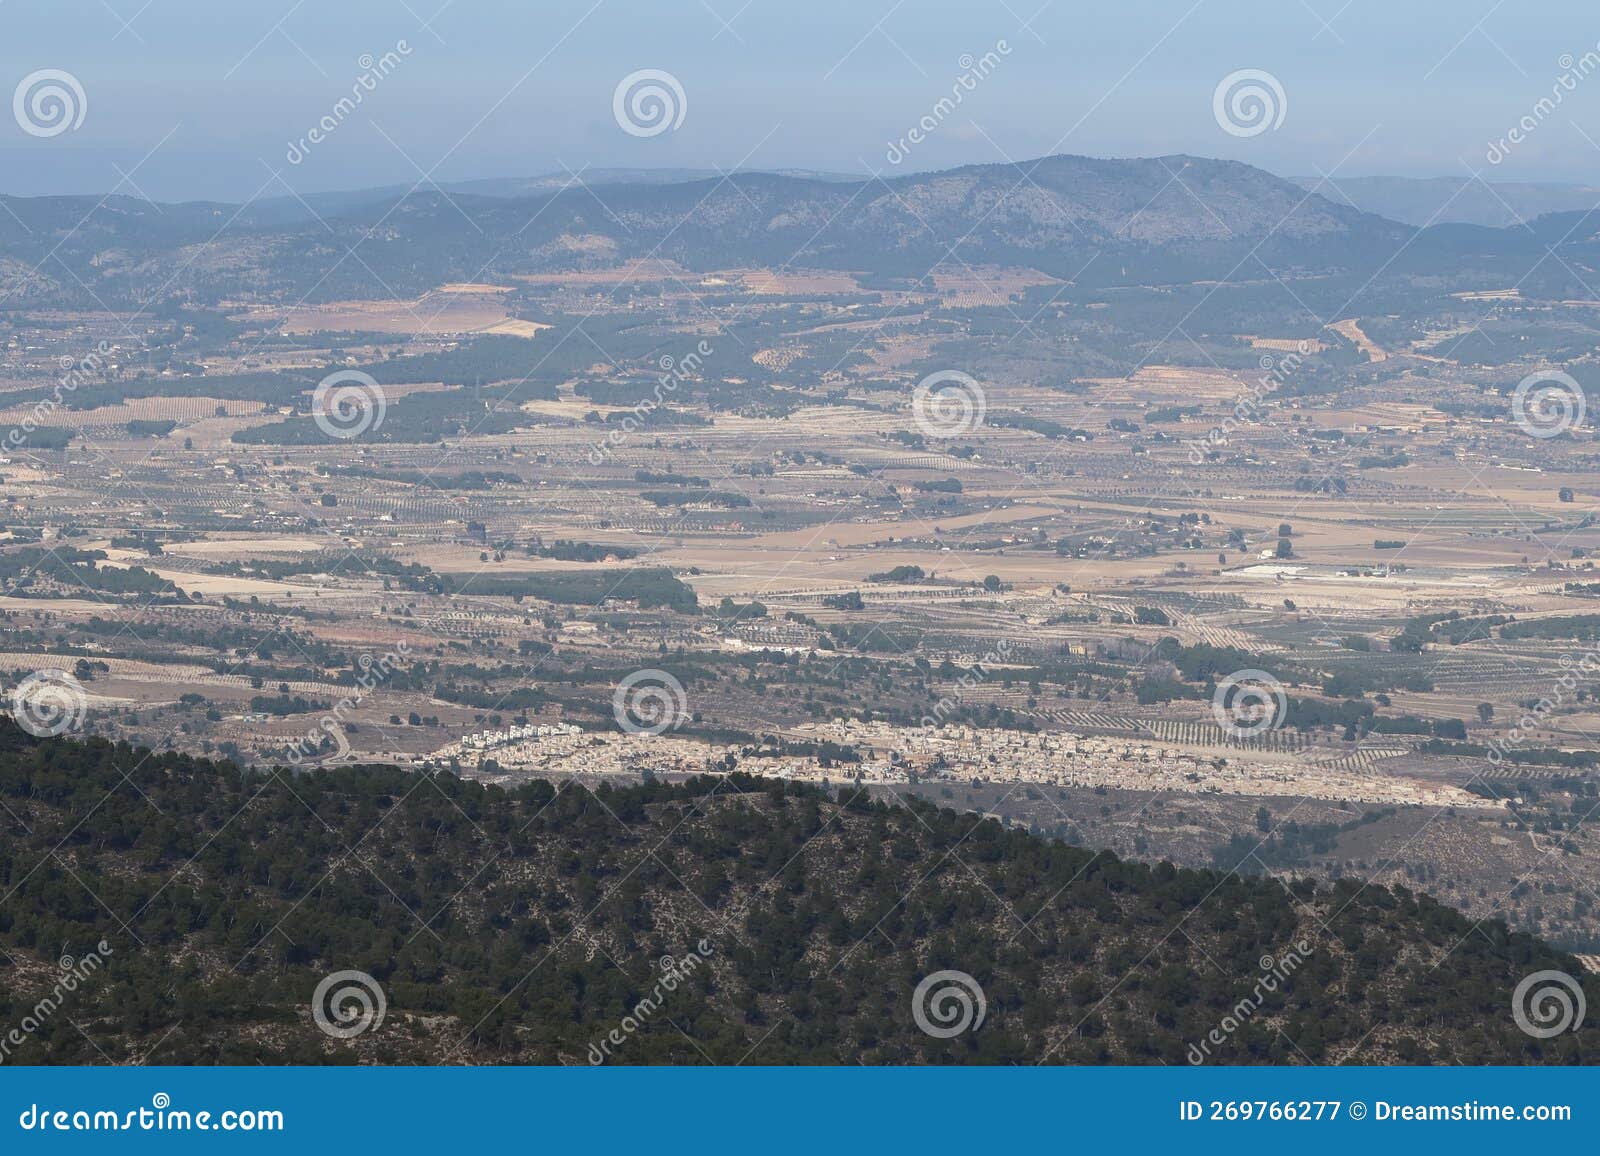 views of the castalla internacional urbanization from the pere paia antennas in the maigmo mountain range. alicante, spain